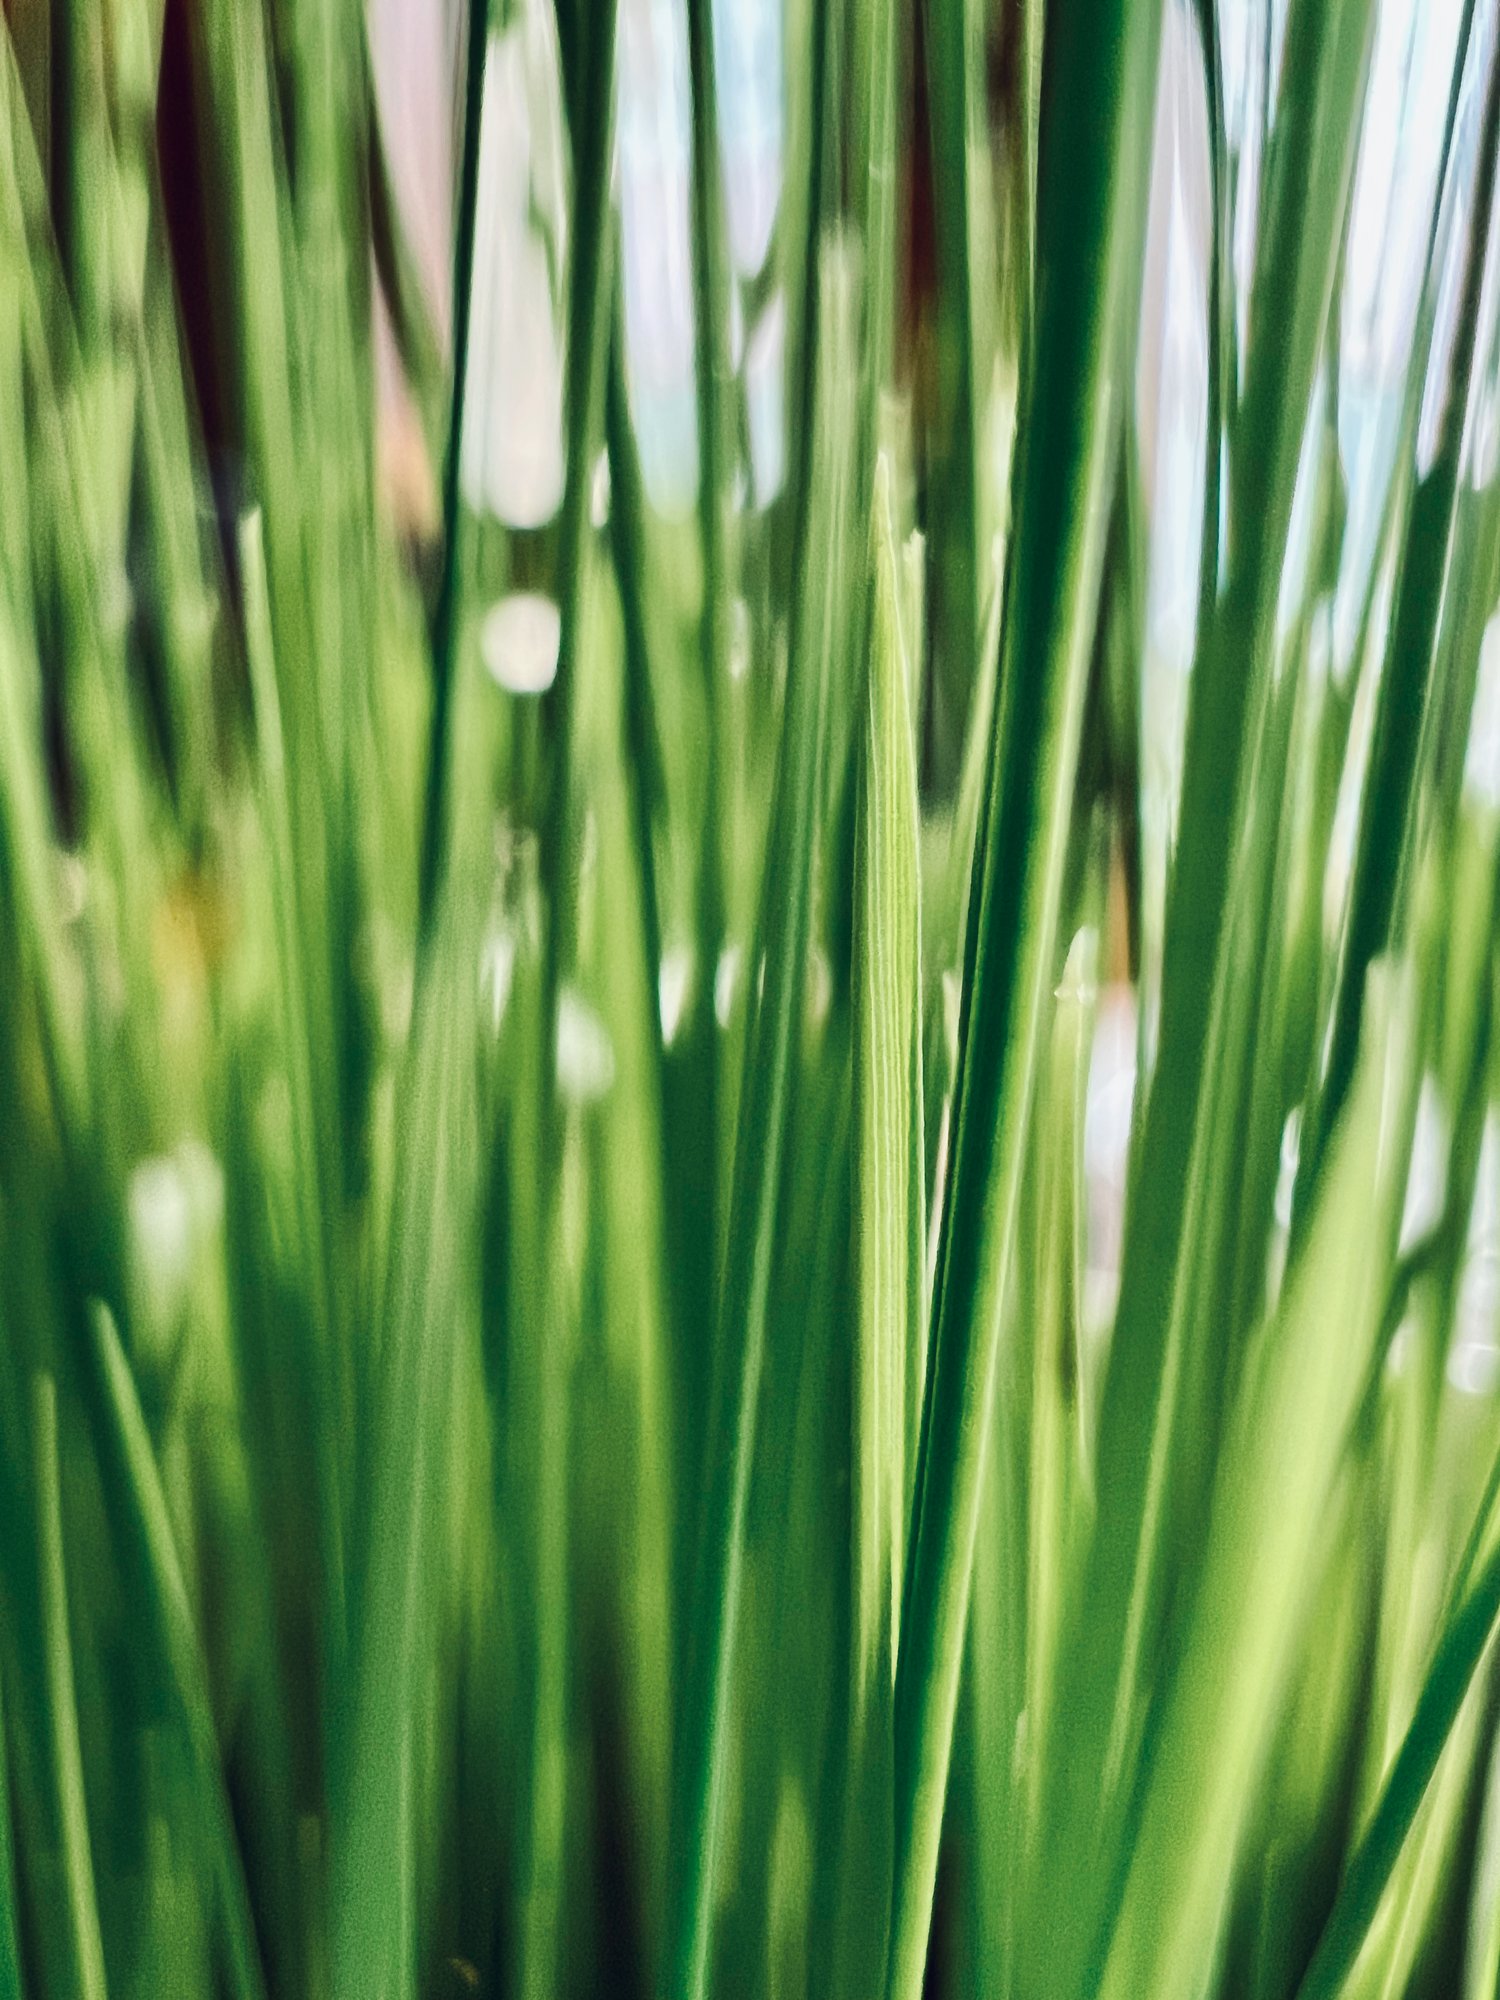 Green Grass Abstract